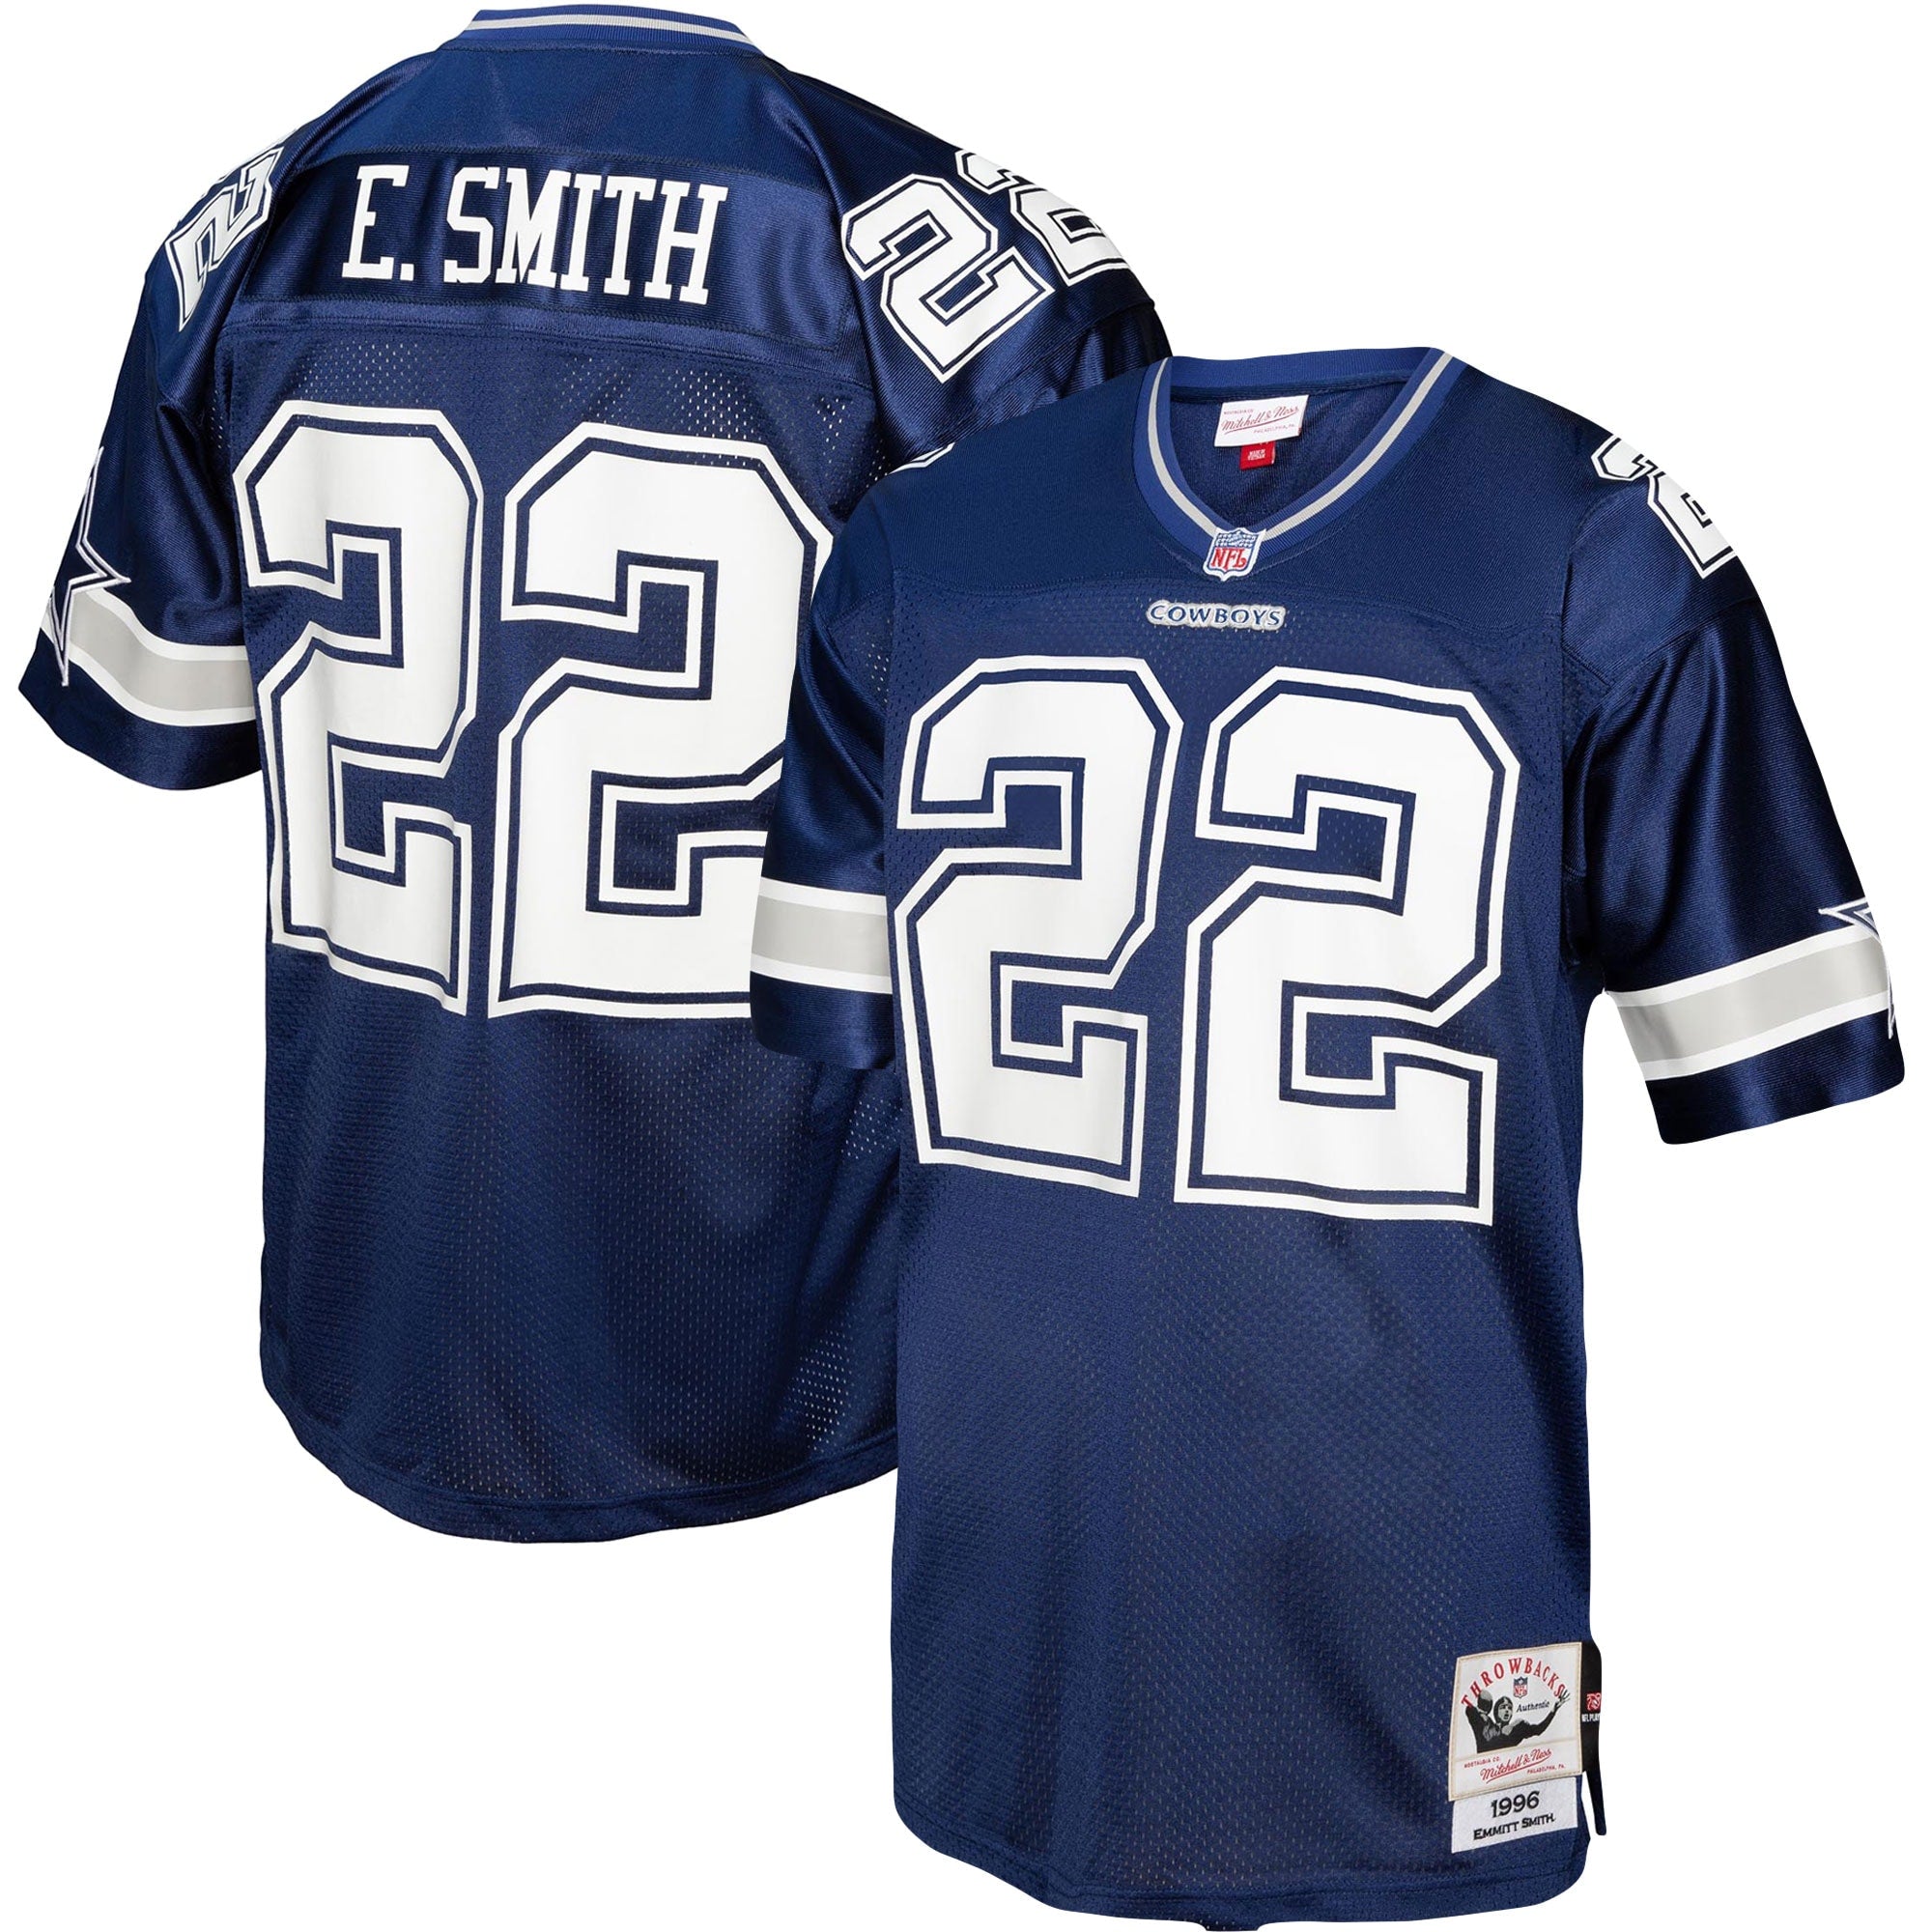 Dallas Cowboys Emmitt Smith # 22 NFL jJersey